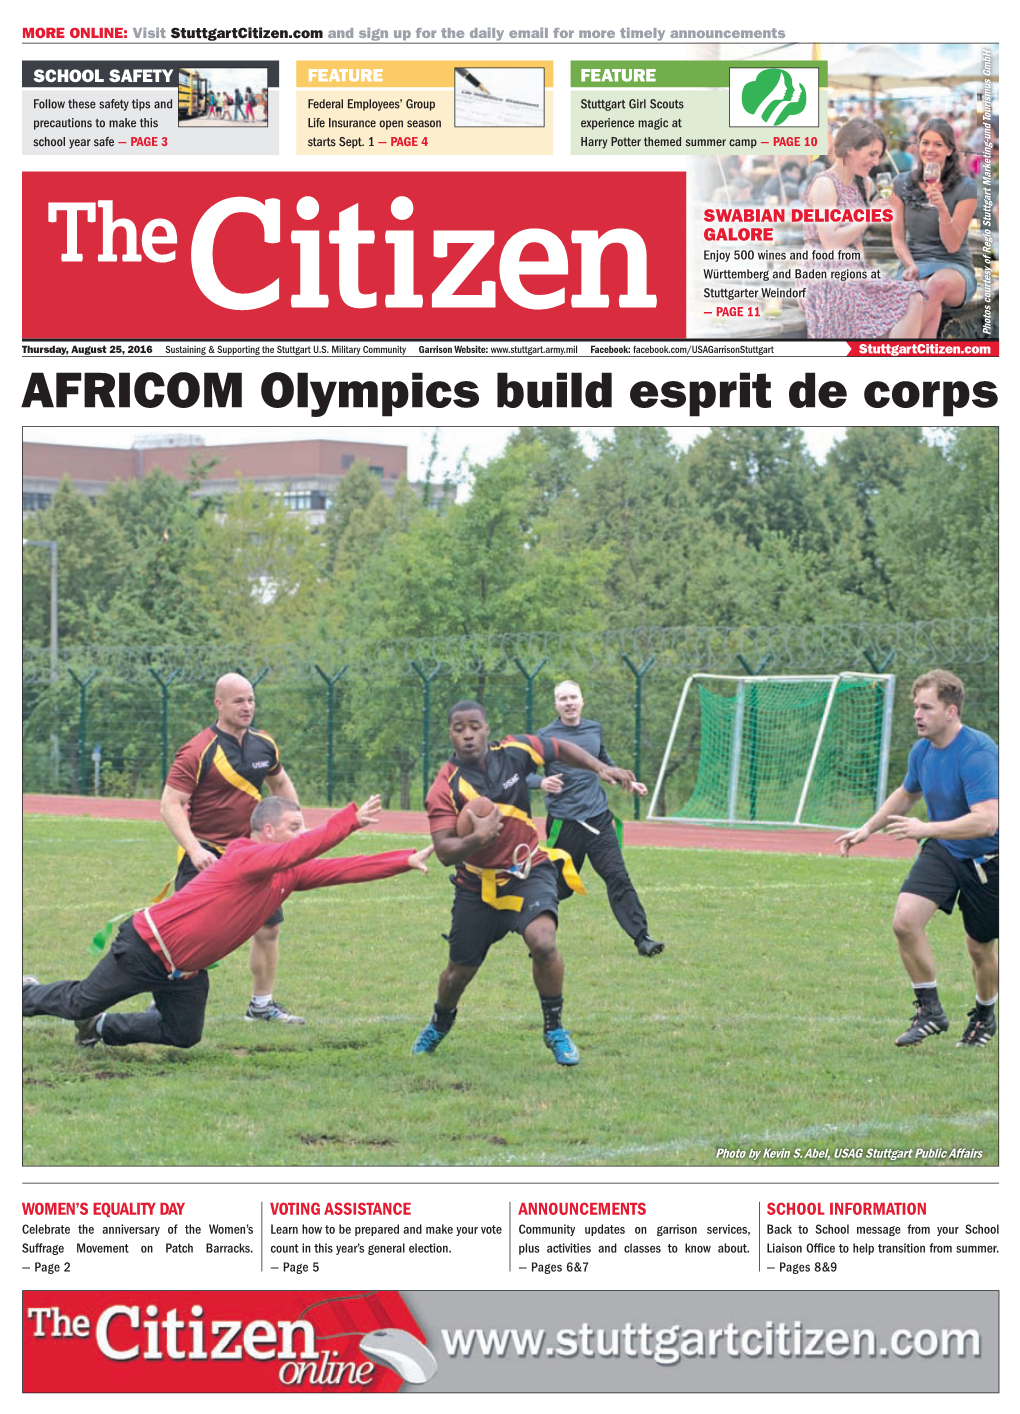 AFRICOM Olympics Build Esprit De Corps